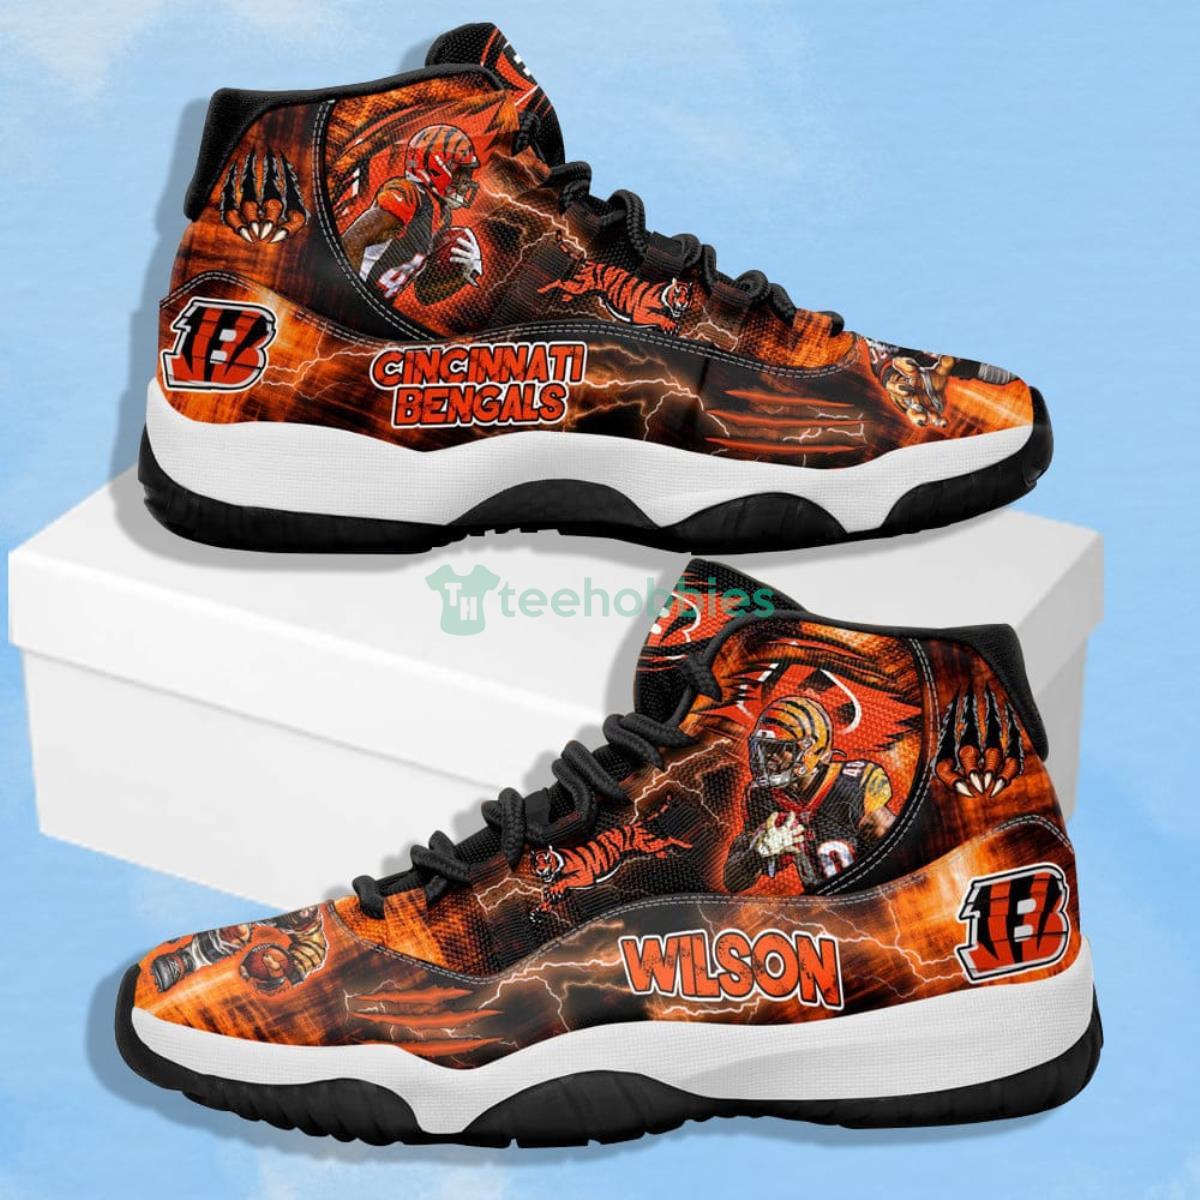 Cincinnati Bengals - Brandon Wilson Impressive Design Air Jordan 11 Shoes Product Photo 1